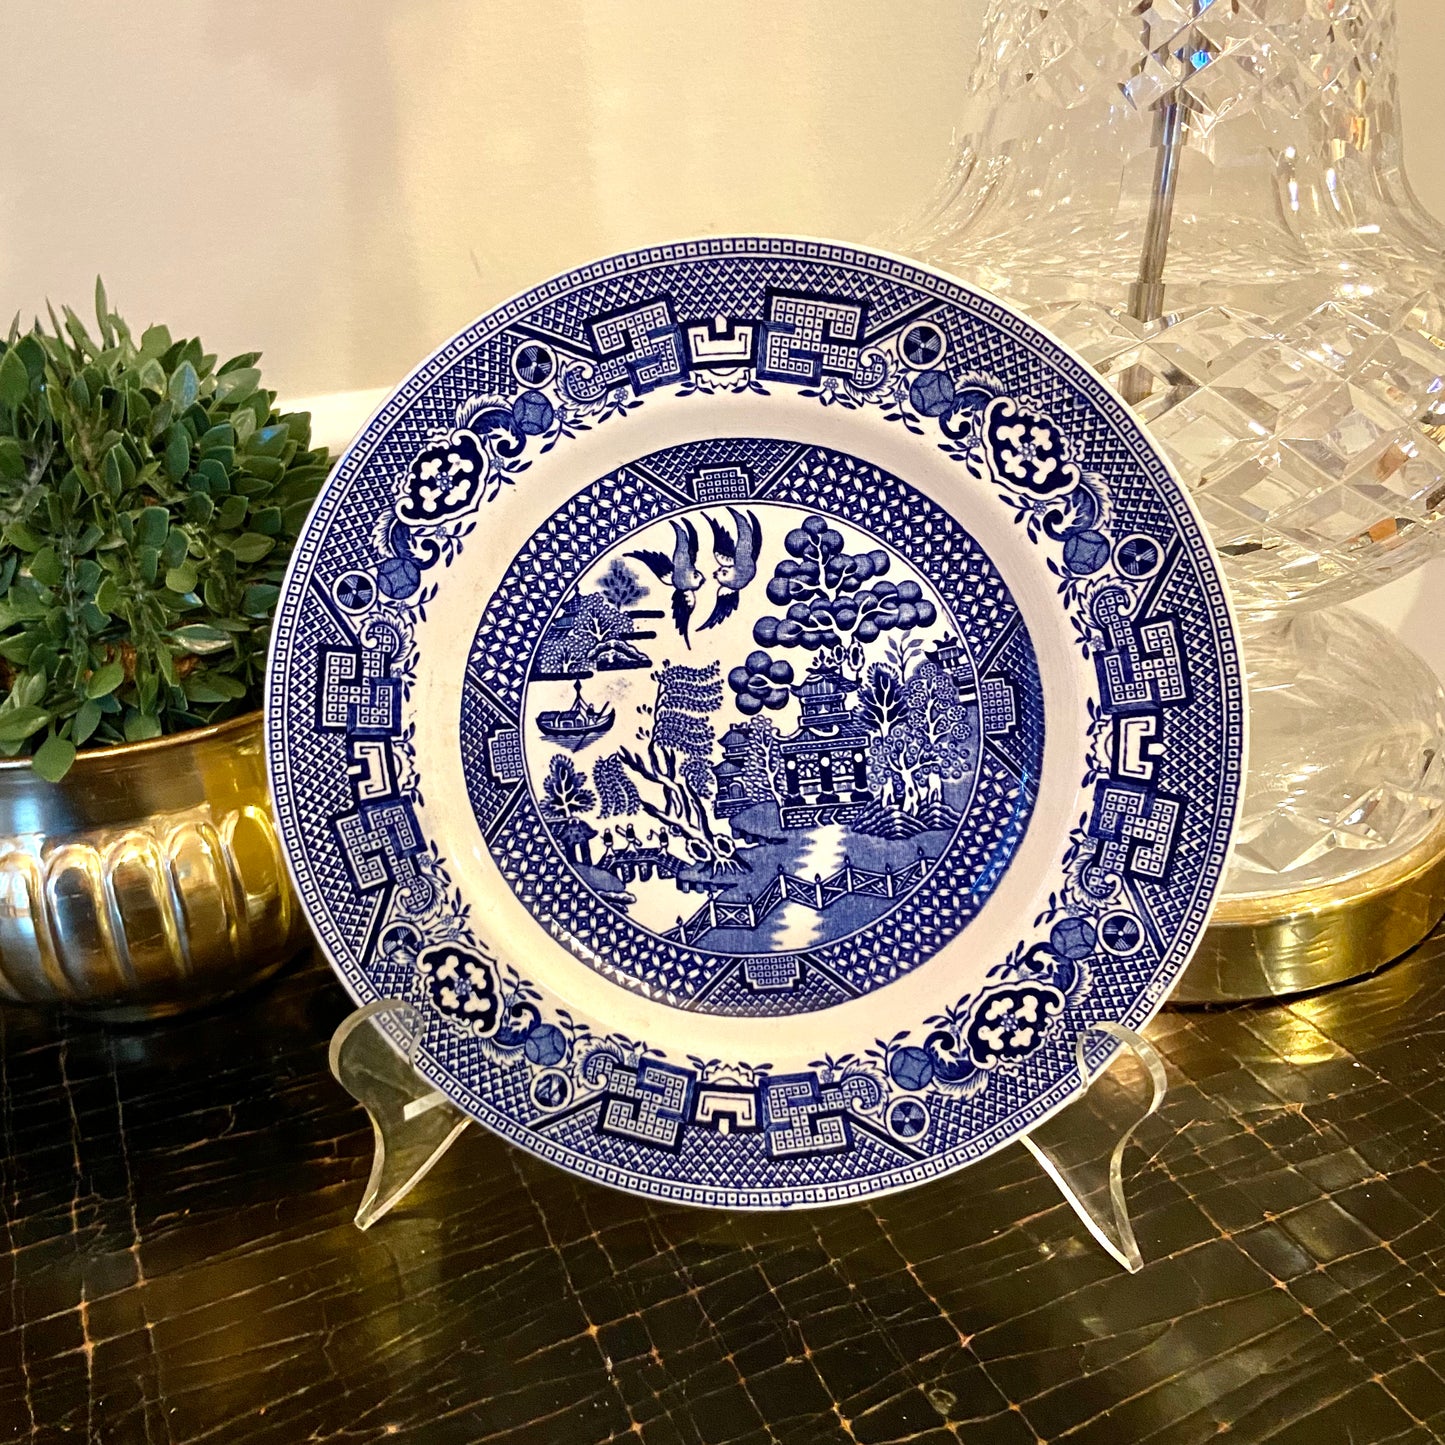 Stunning cobalt Old Willow Dinner Plate by Swinnertons of Staffordshire England